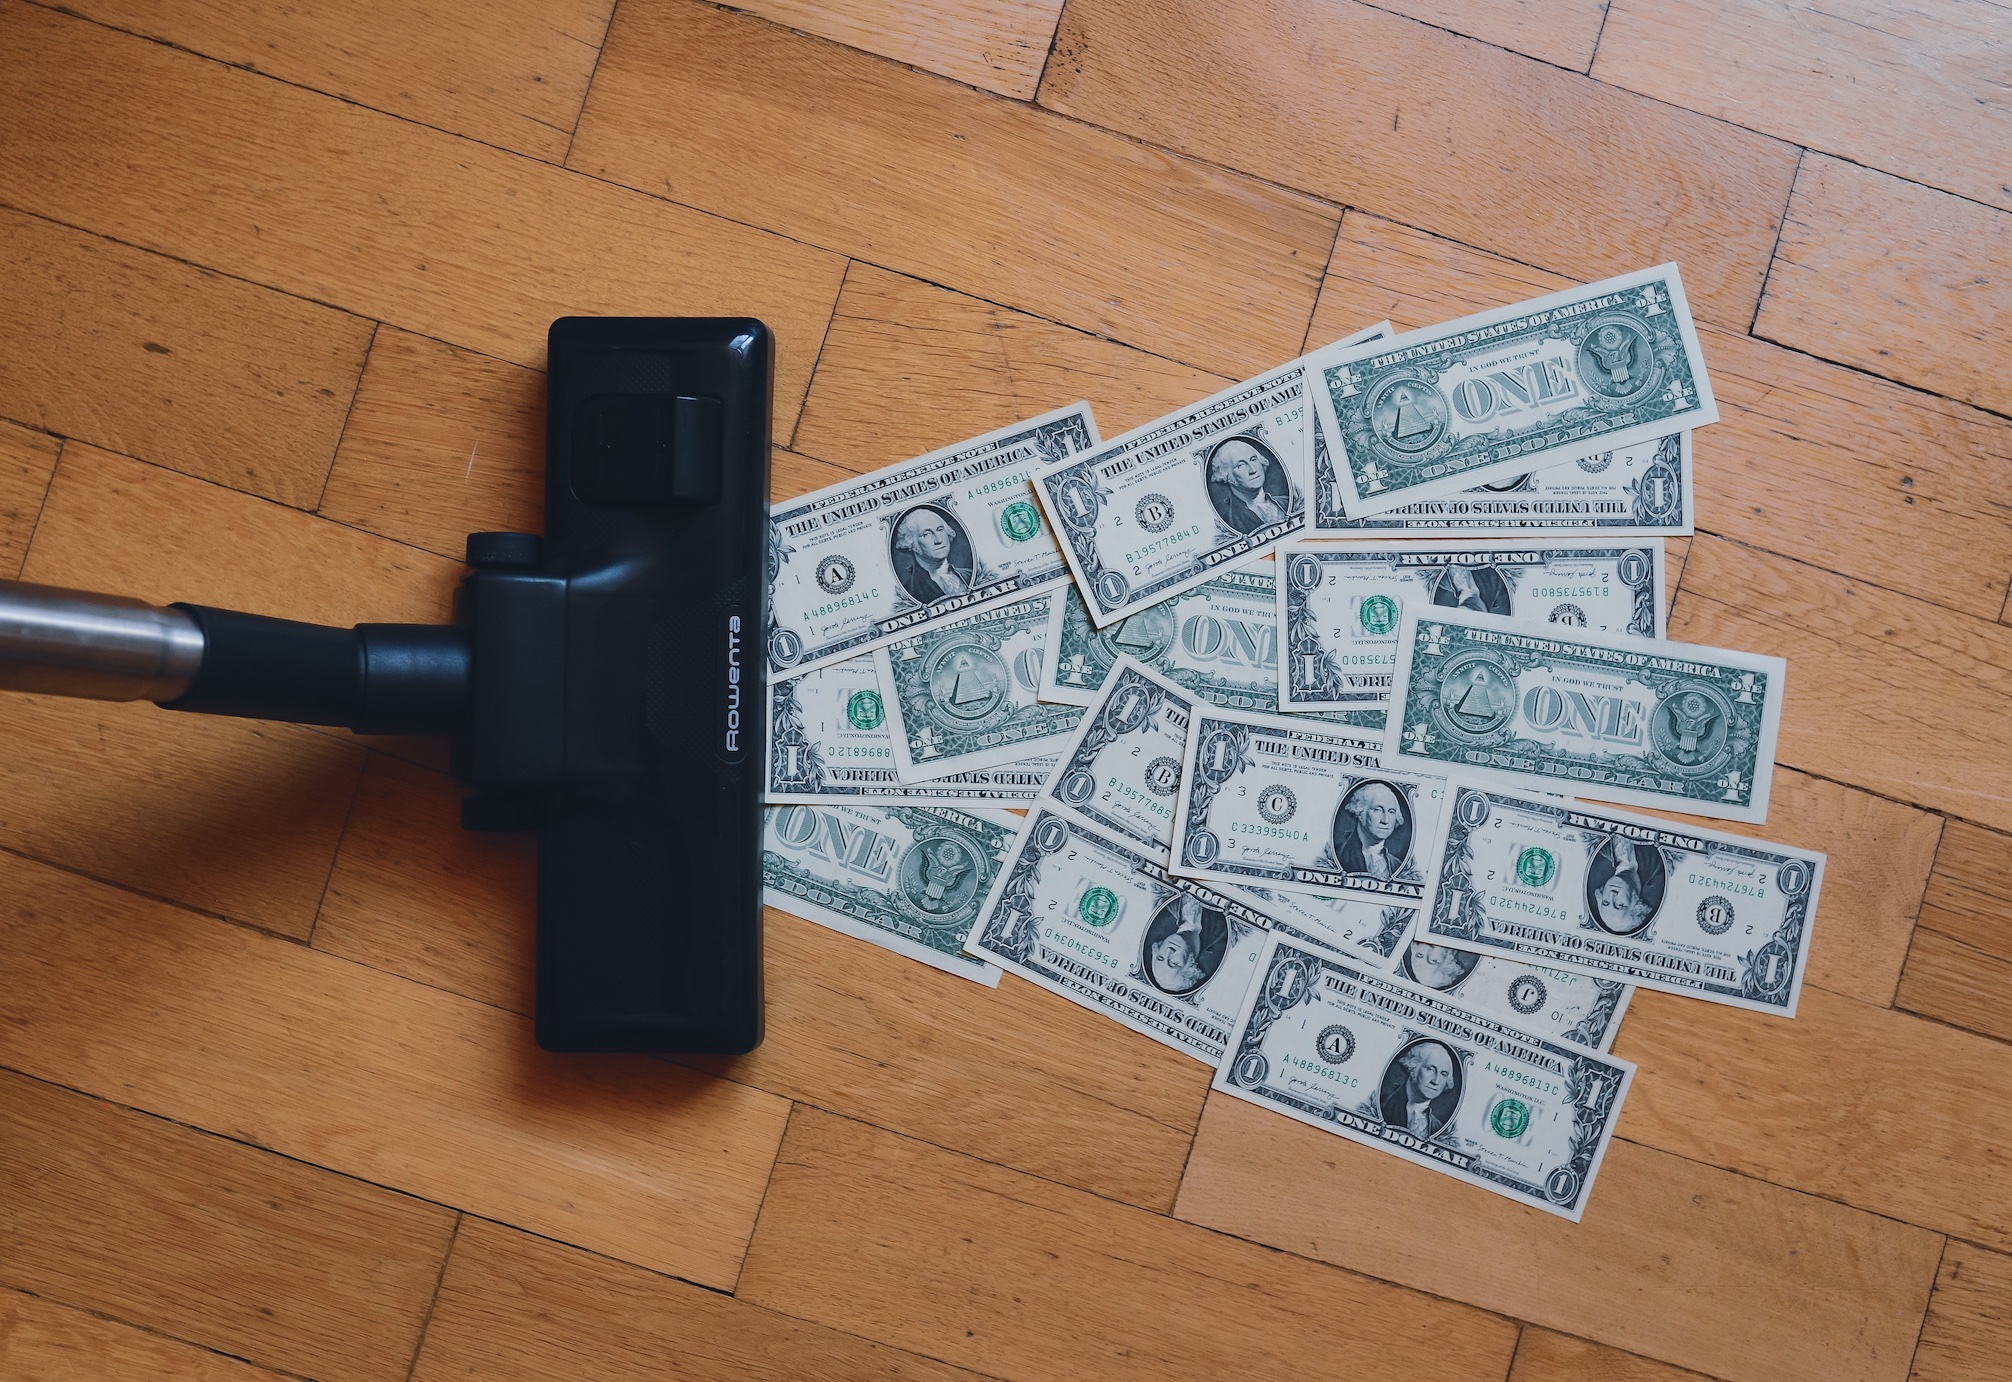 Vacuum cleaner sucking up dollar bills; image by RegularGuy.eth, via Unsplash.com.